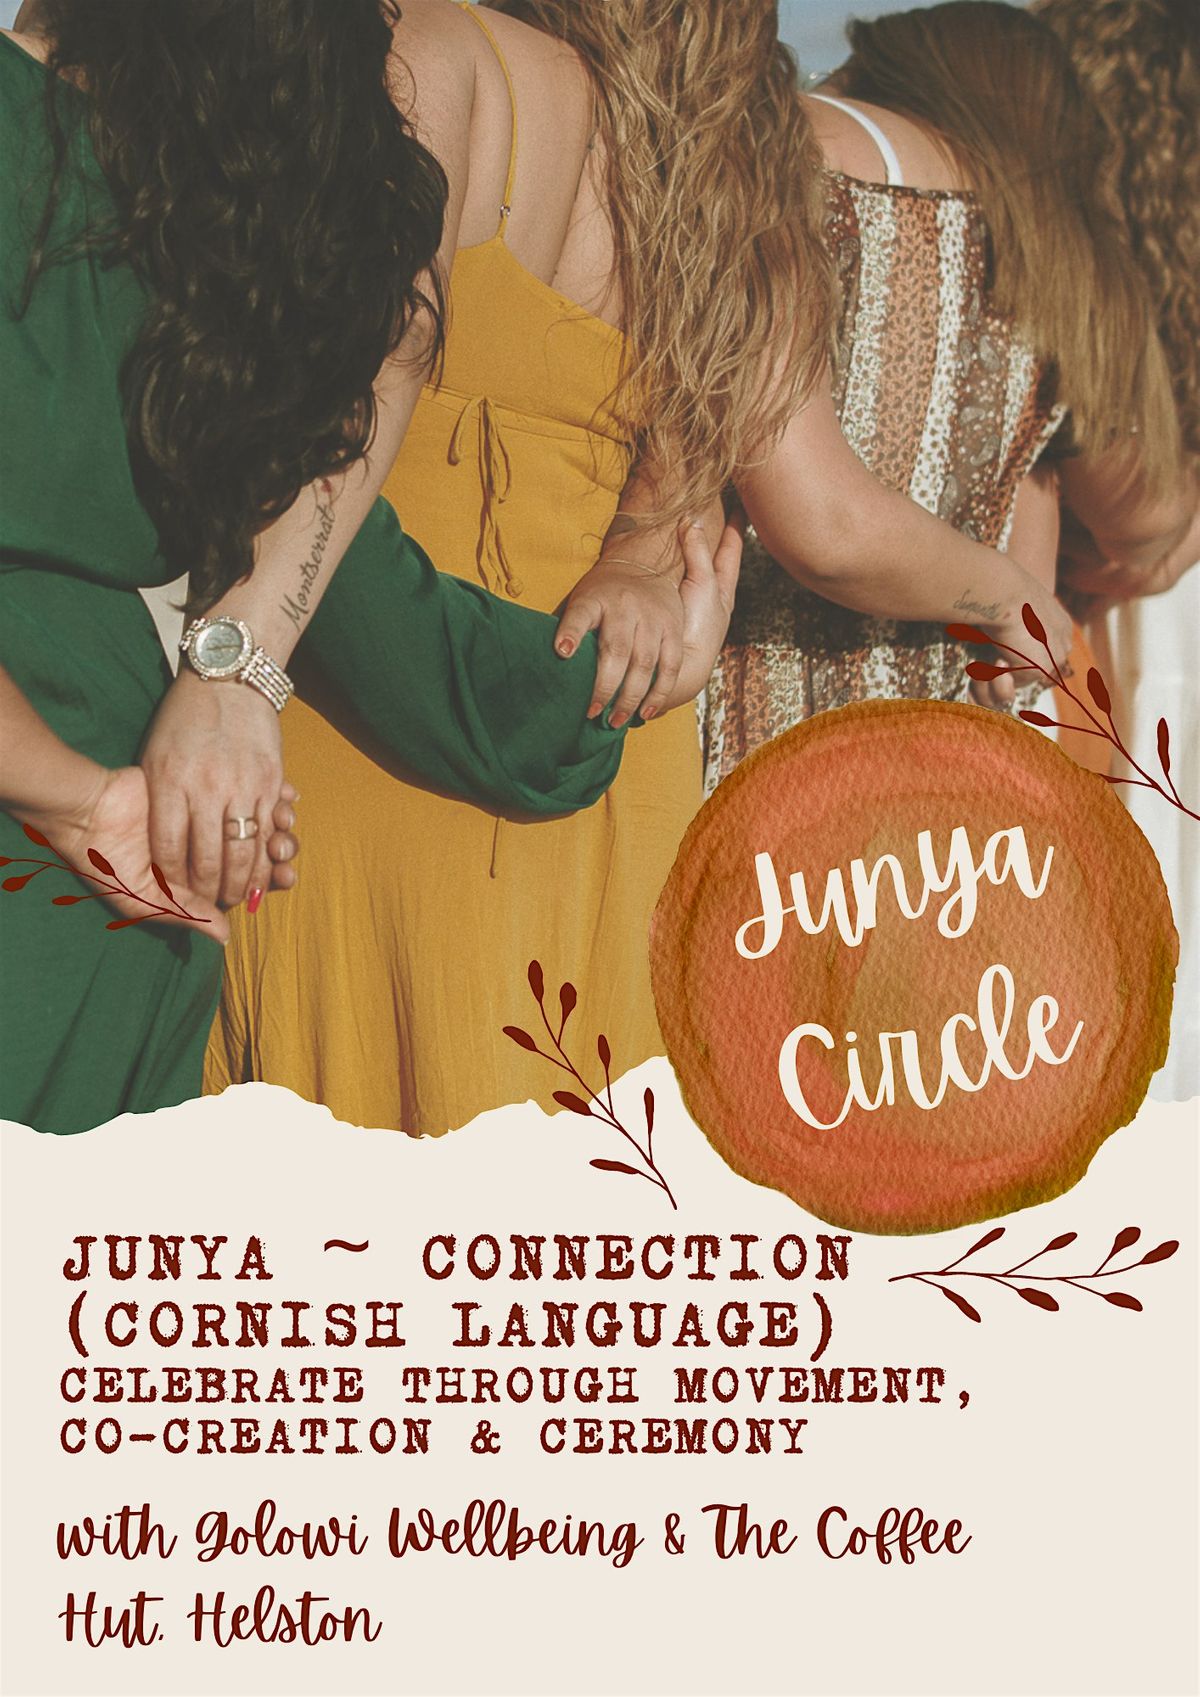 Junya Women's Circle ~ Yoga & Connections